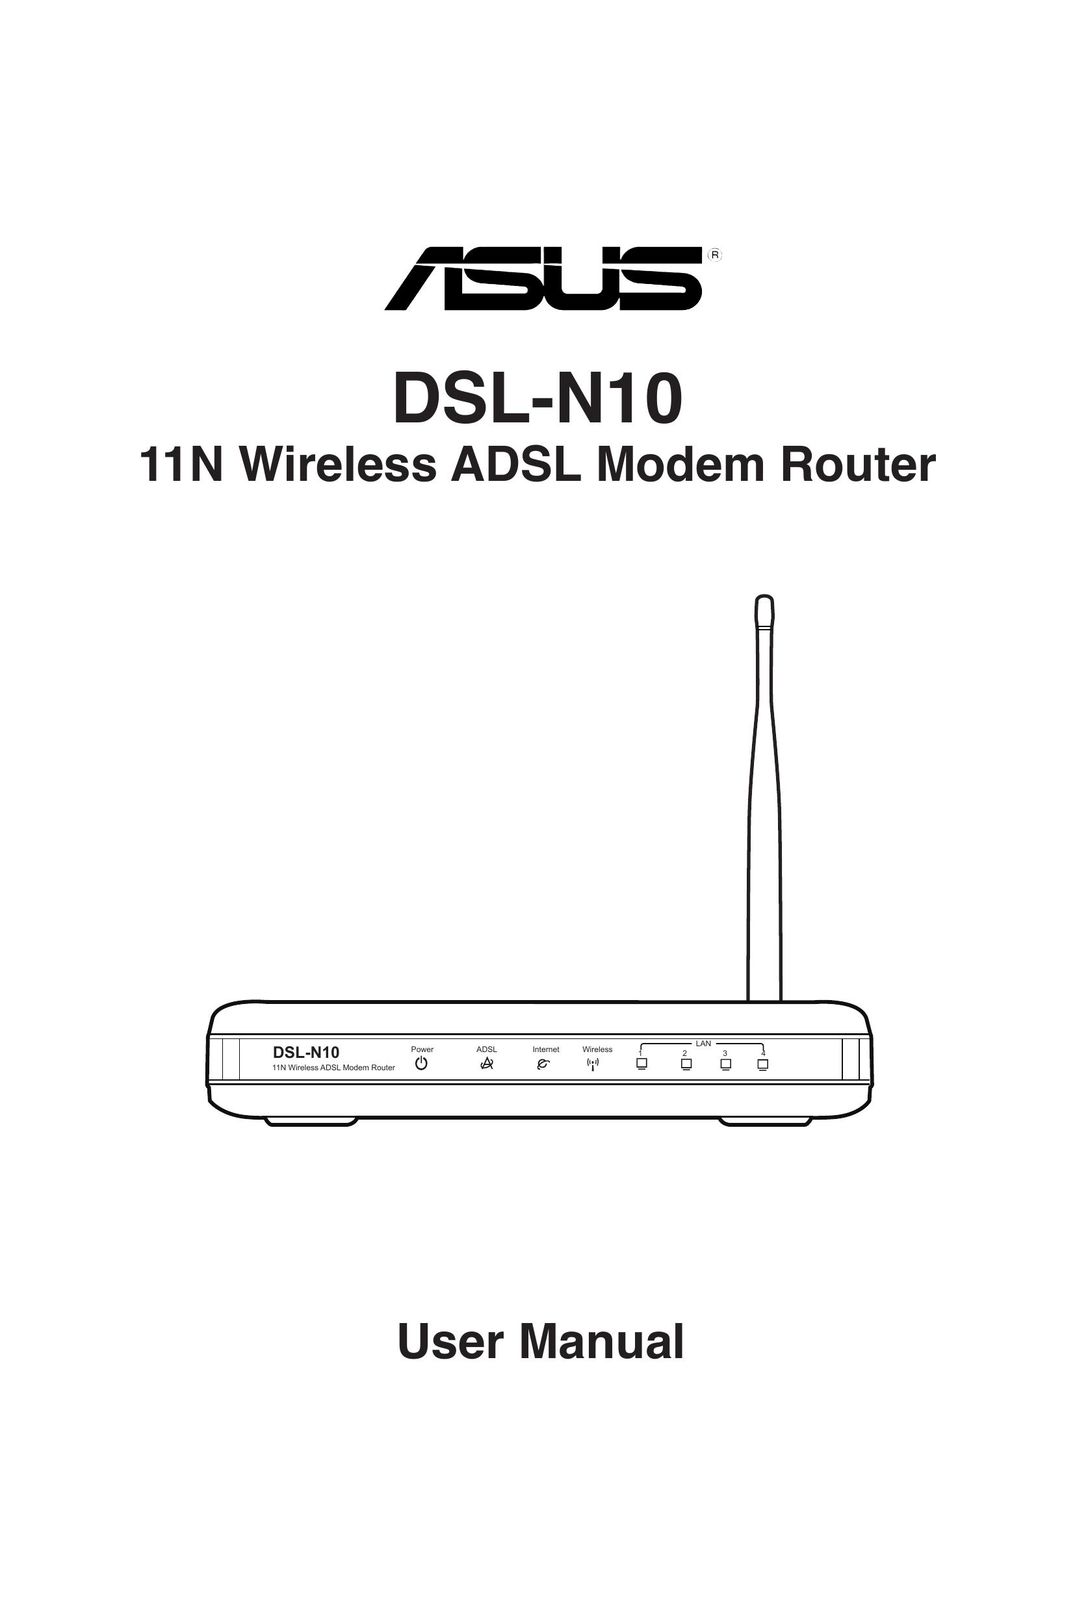 Asus DSL-N10 Network Router User Manual